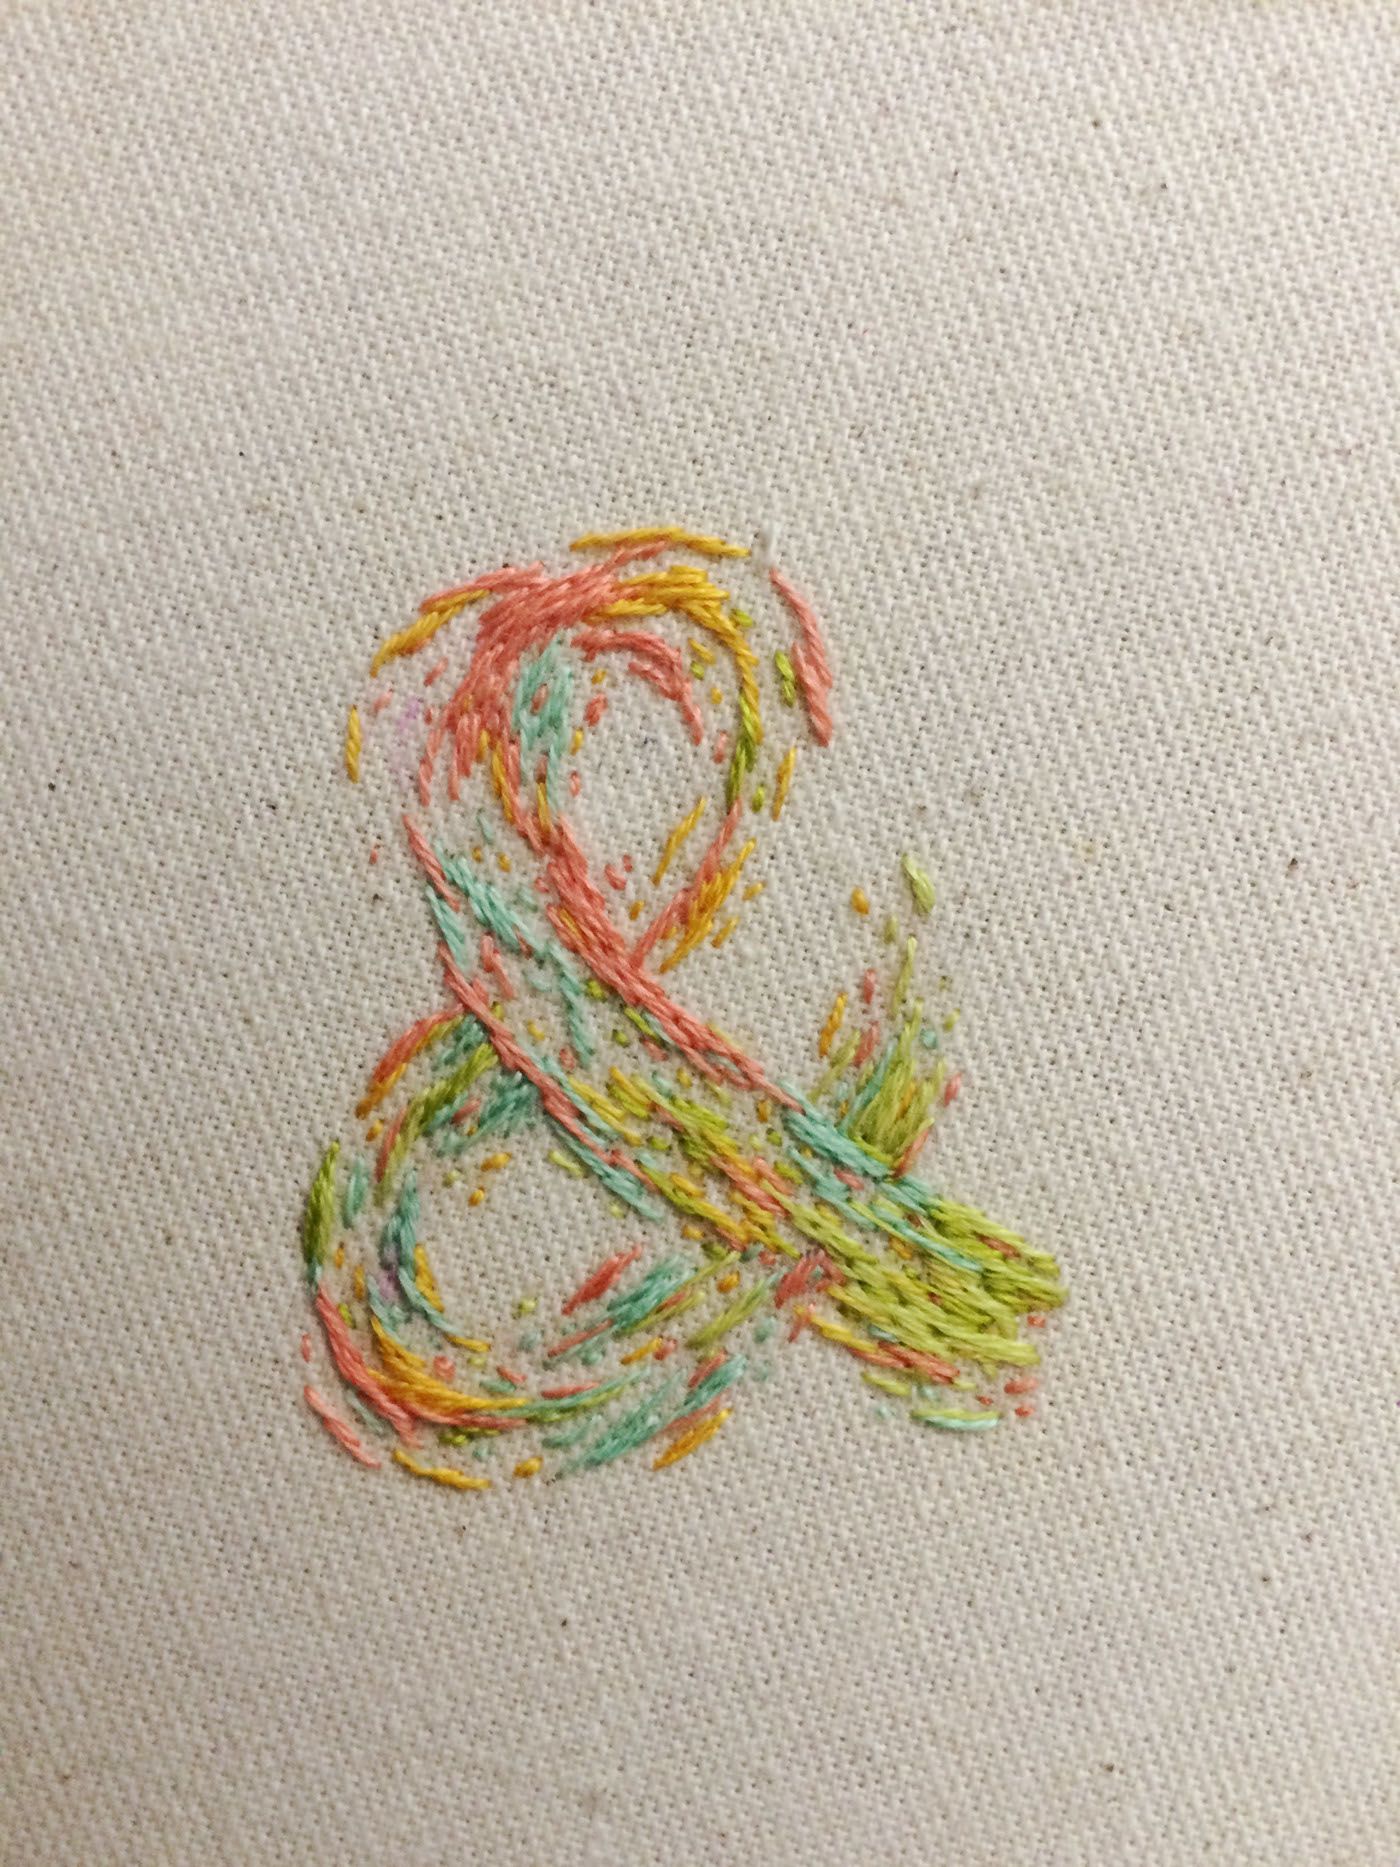 Embroidery Handlettering lettering design Needlework